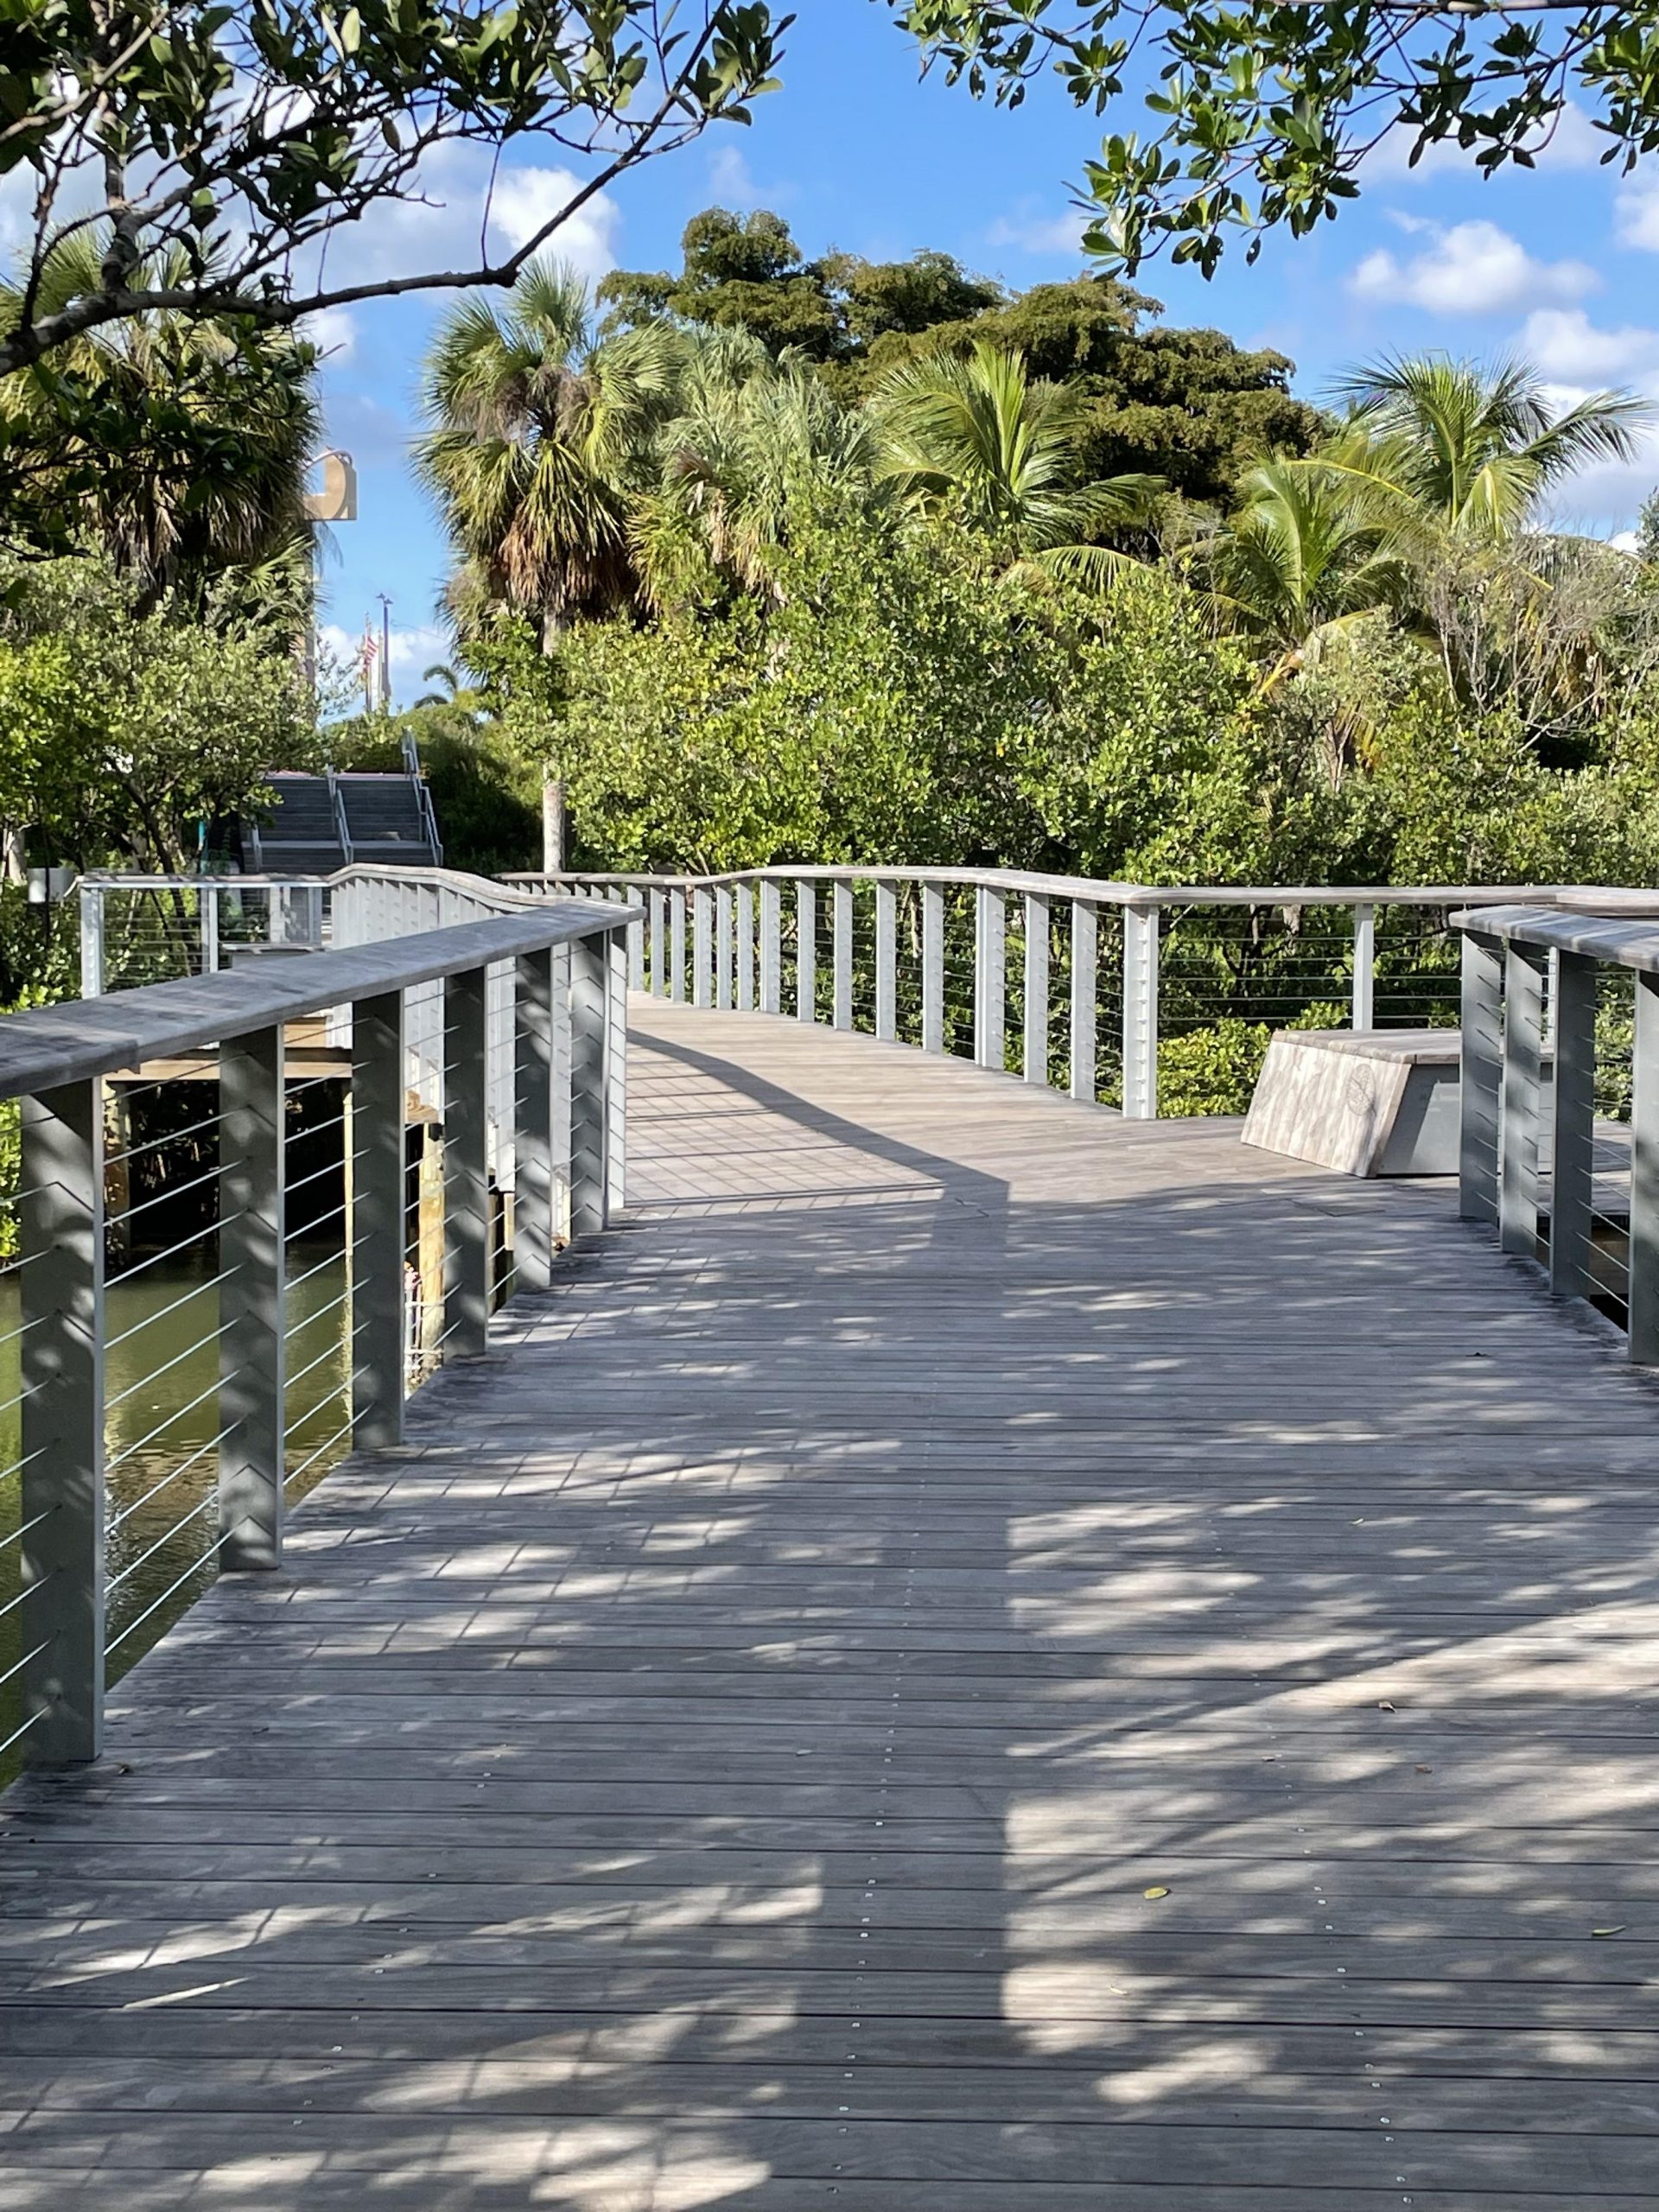 Bridge across the Mangrove.